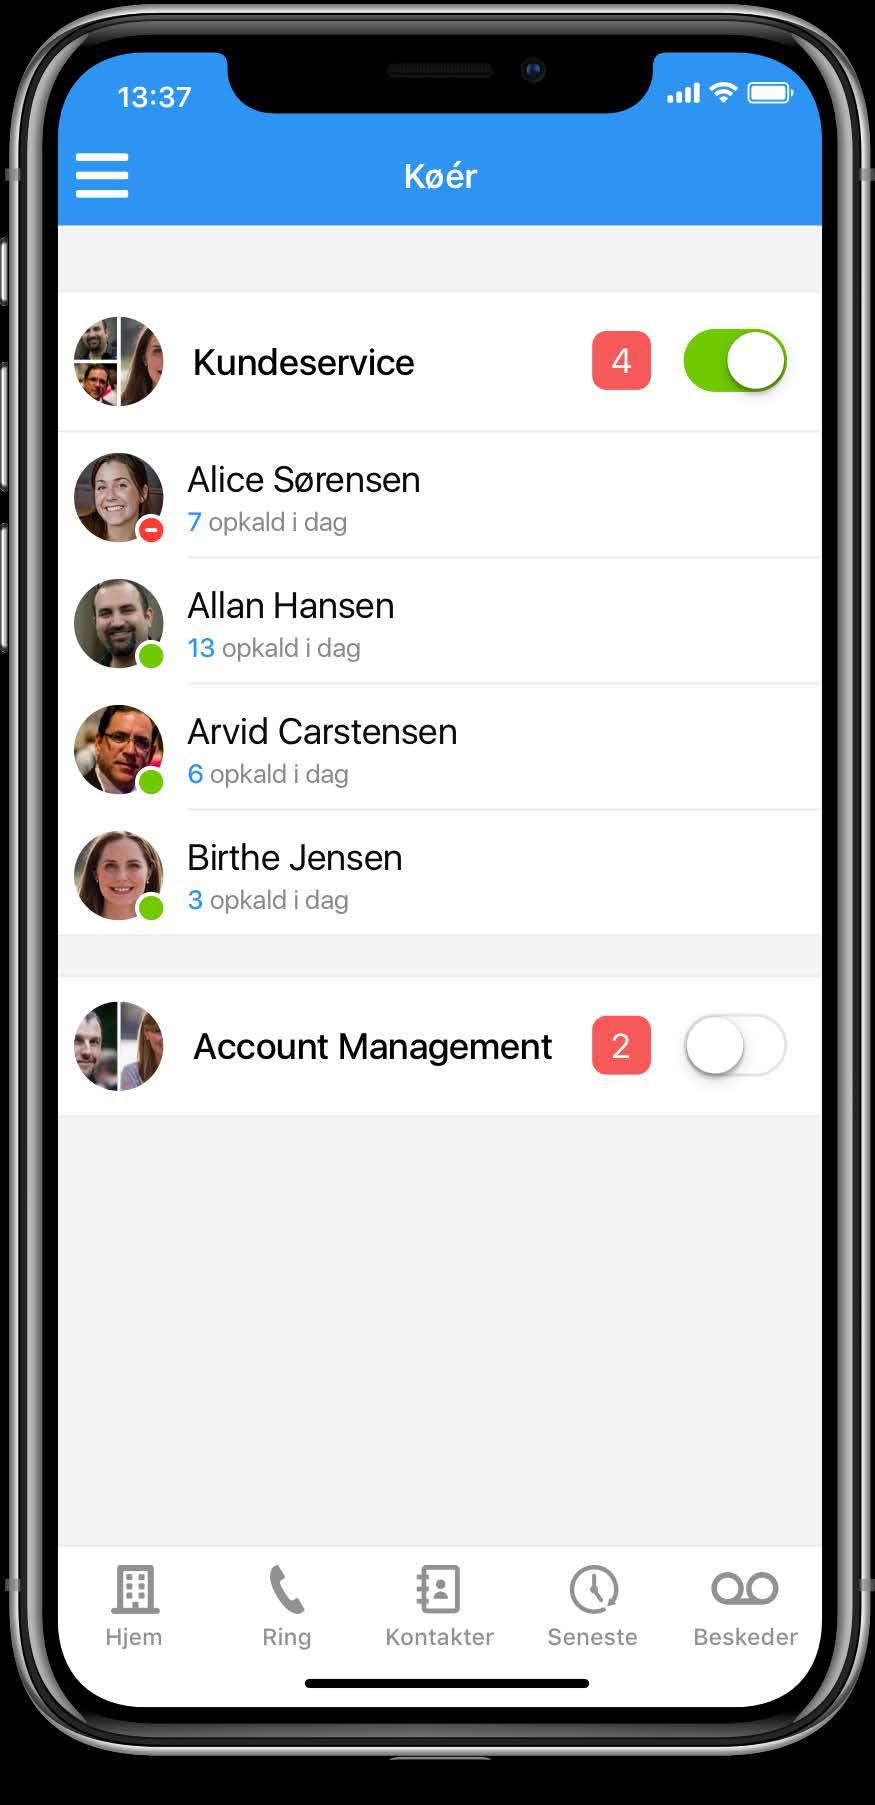 Er du fx til møde, så kan Bizfone app en automatisk viderestille dine kundekald til en kollega eller en telefonkø, som du selv